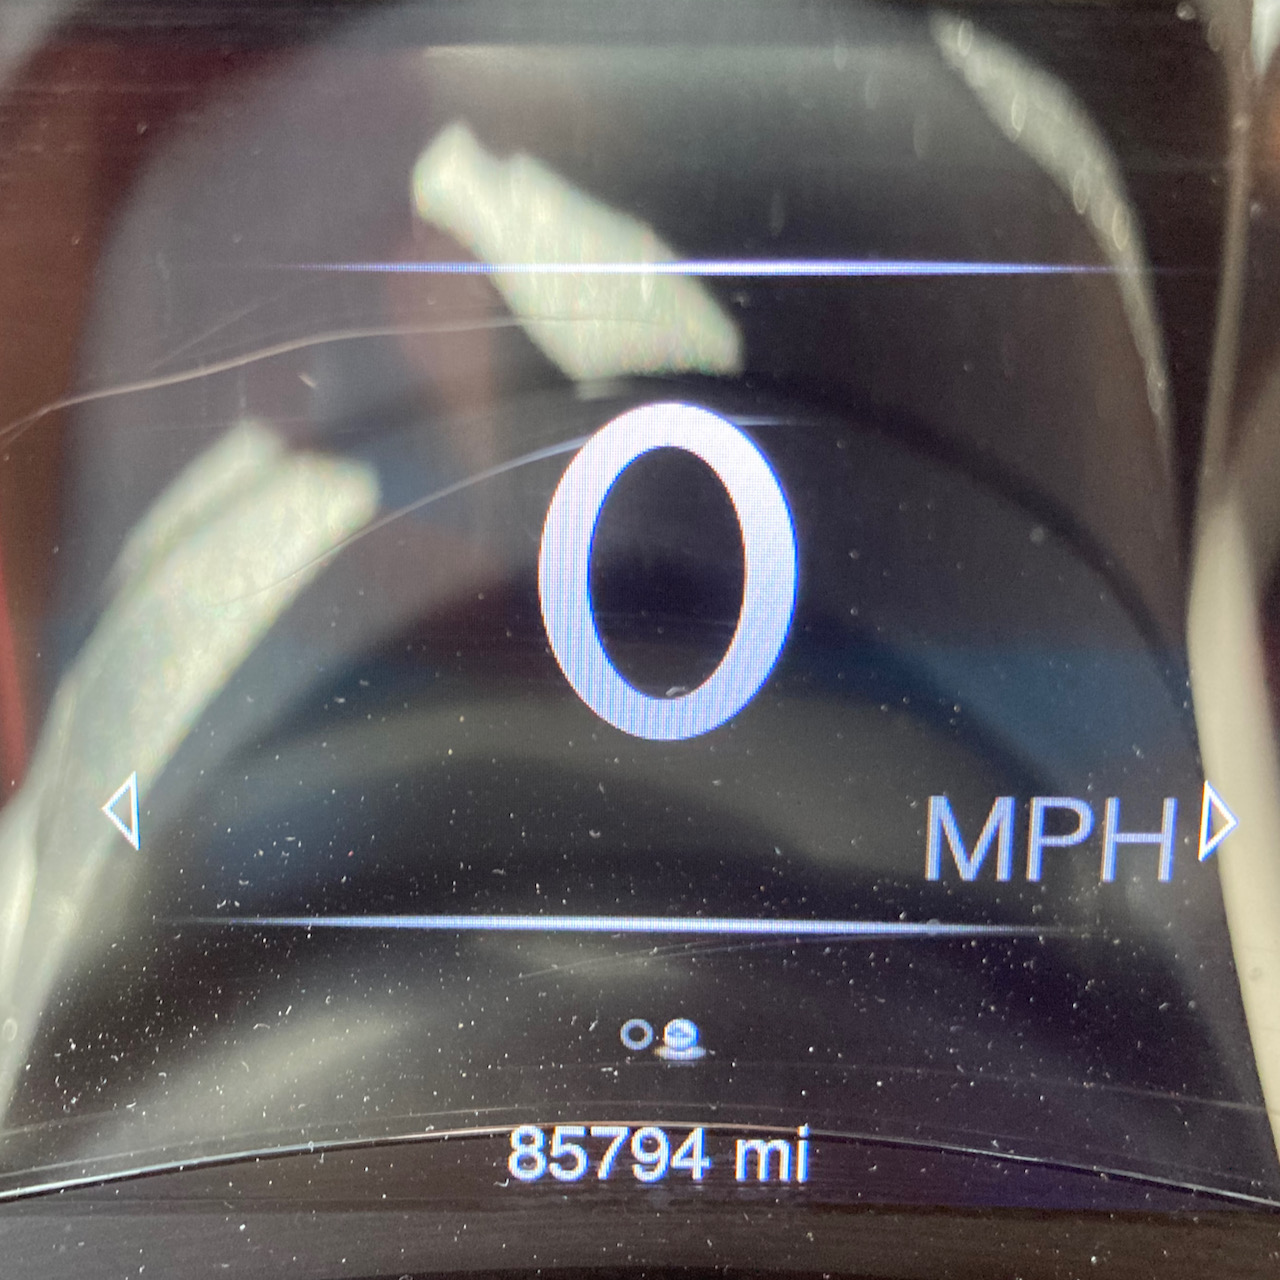 Car odometer reading 85794 miles.